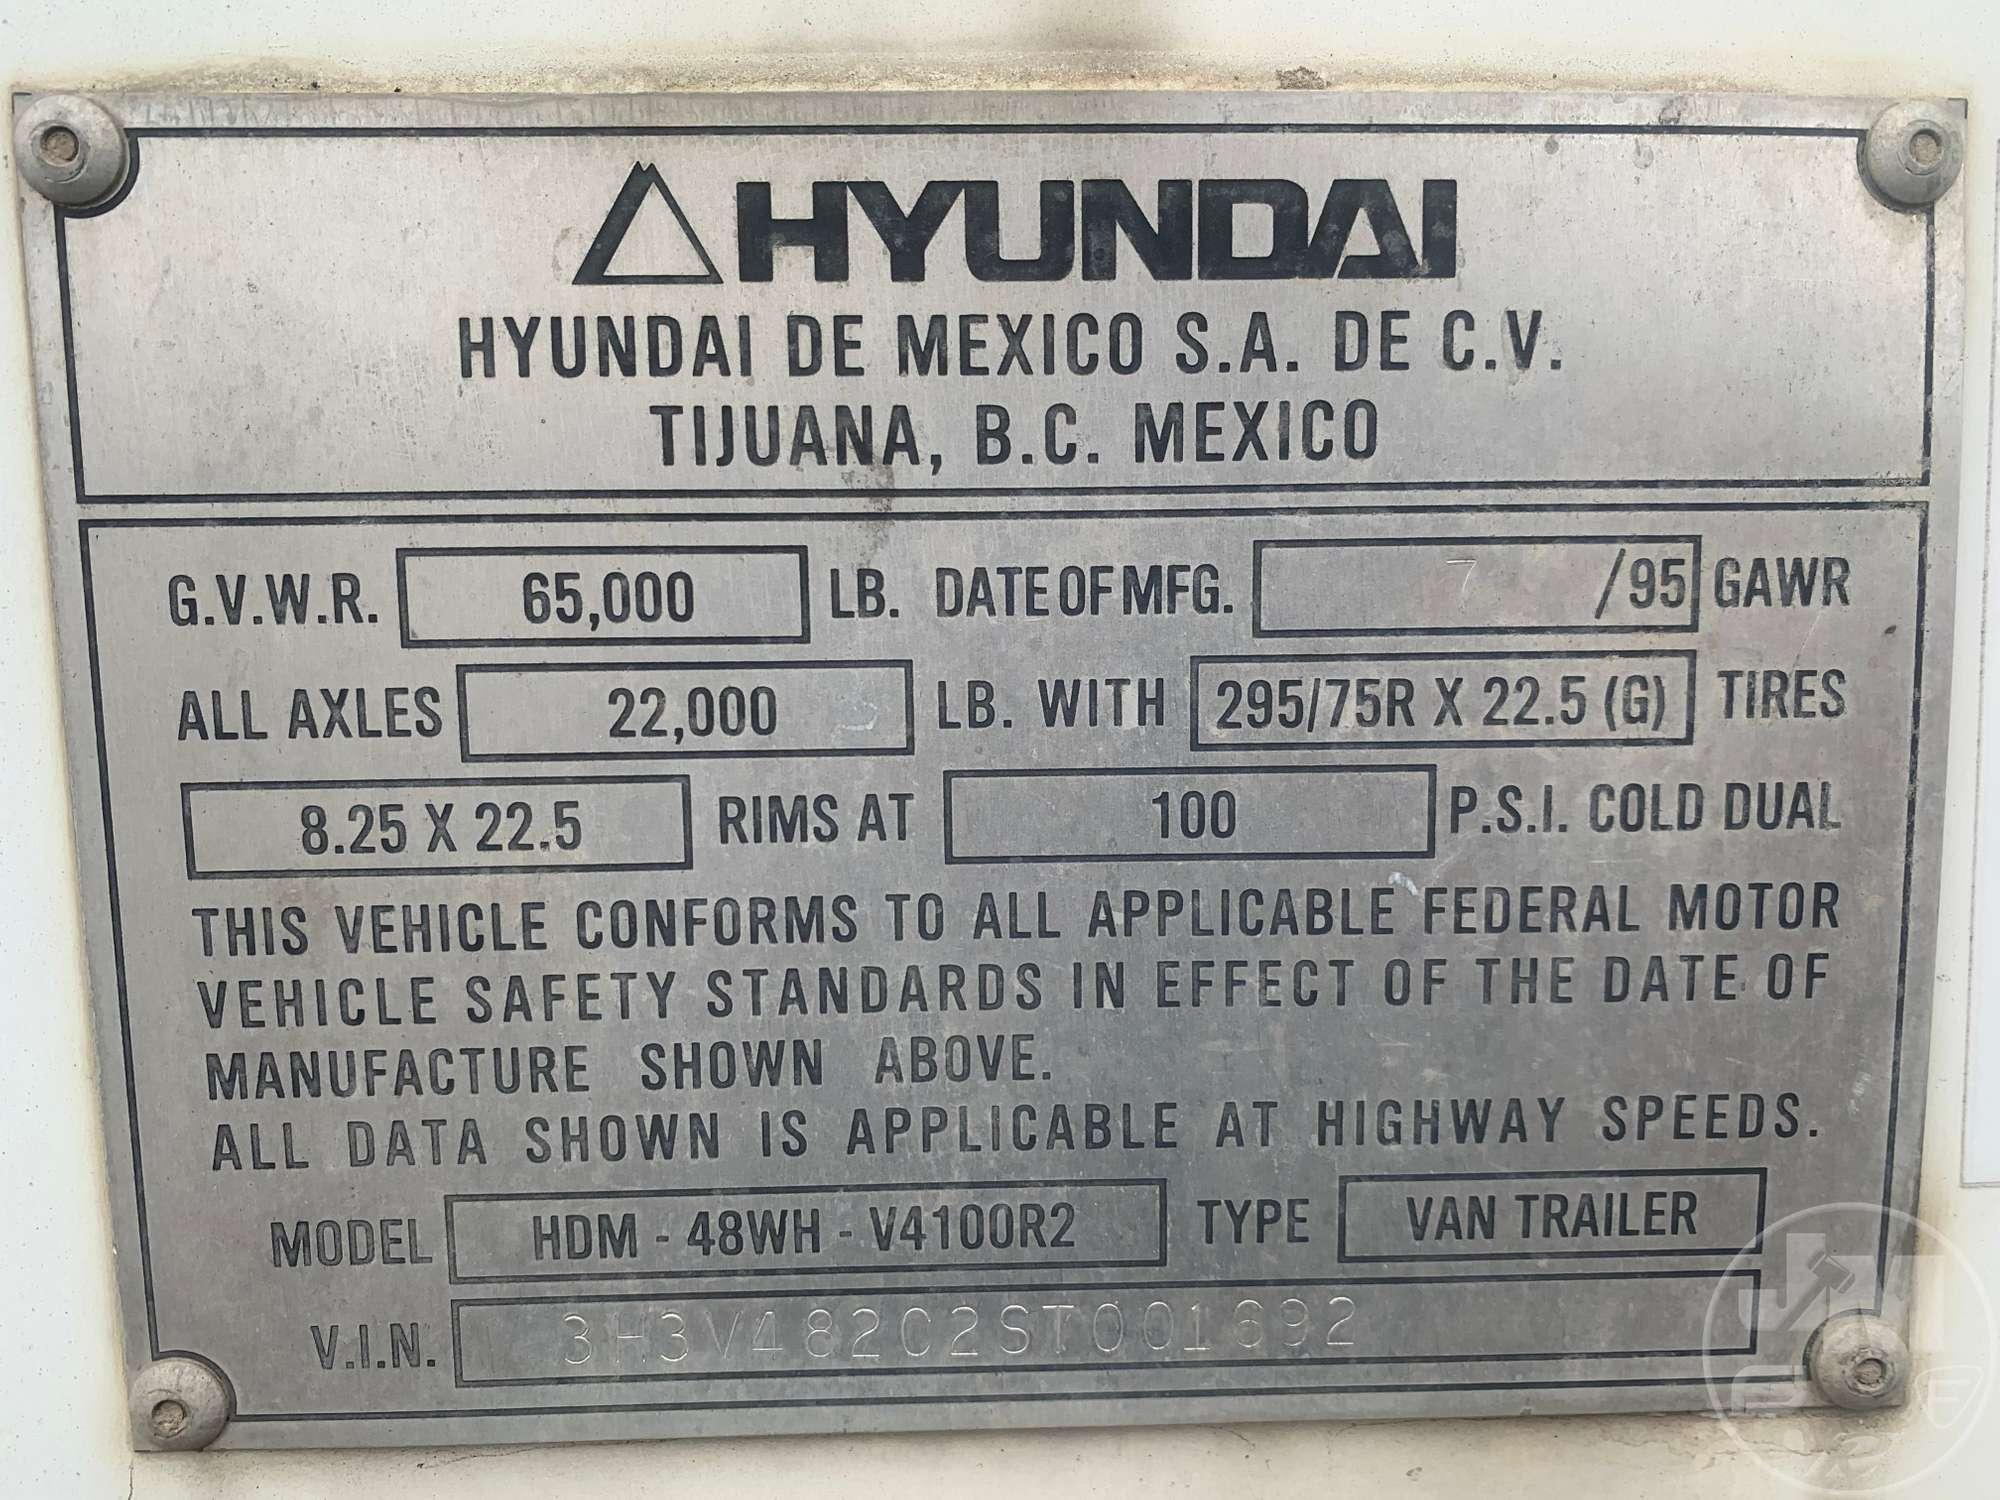 1995 HYUNDAI TRANSLEAD TRAILERS HYUNDAI TRANSLEAD TRAILERS 48'X102" VAN TRAILER VIN: 3H3V482C2ST0016